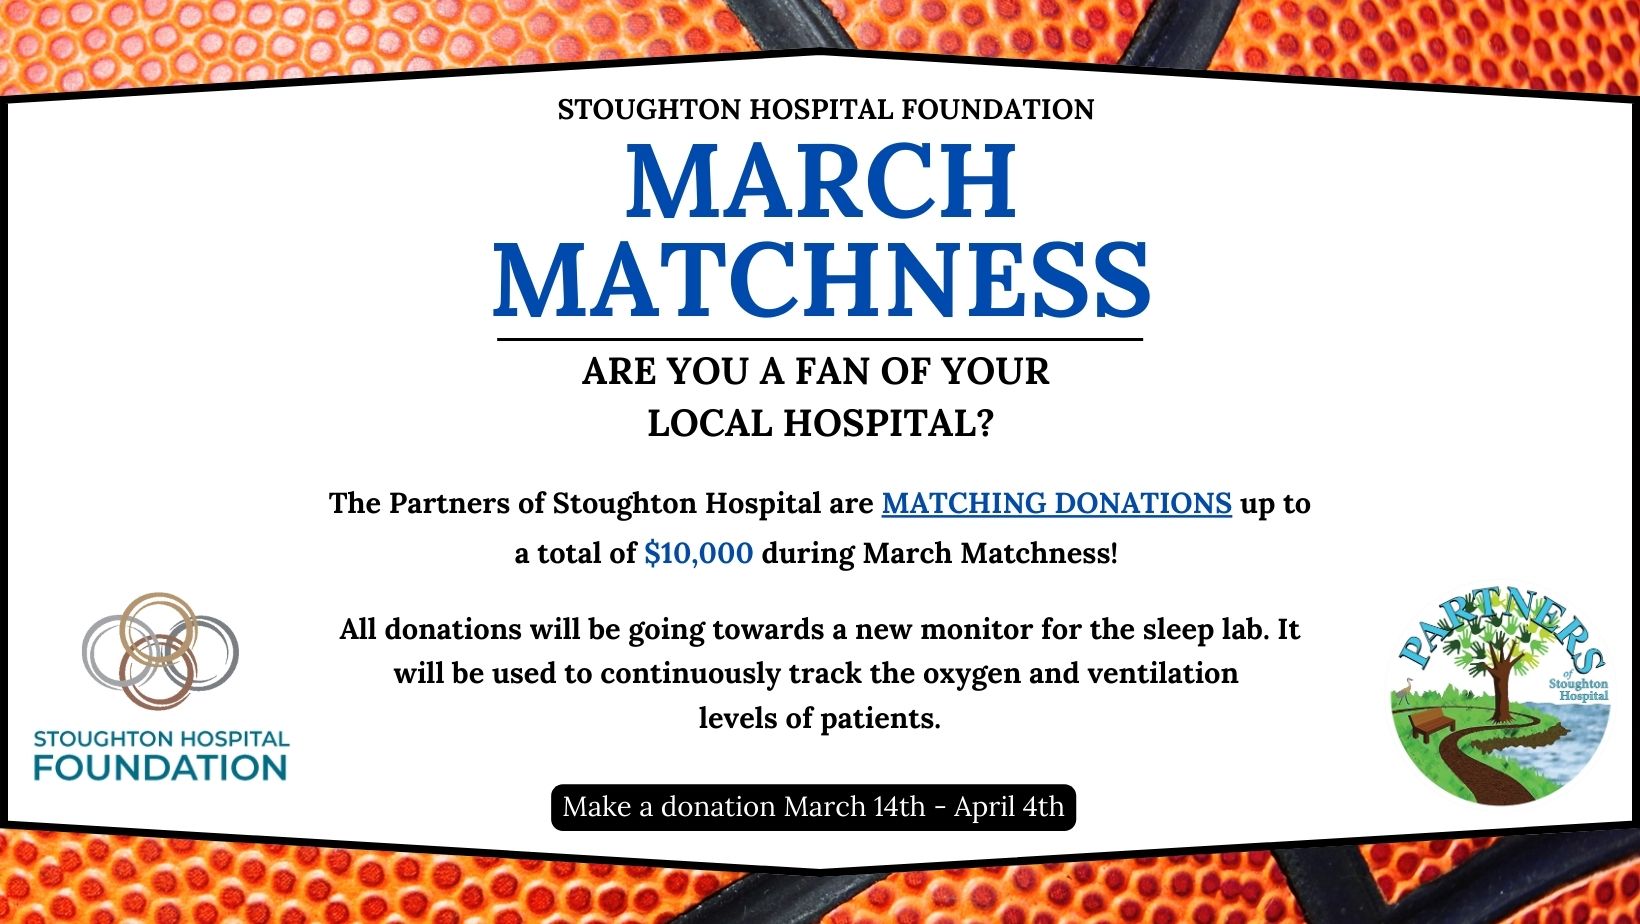 March Matchness information